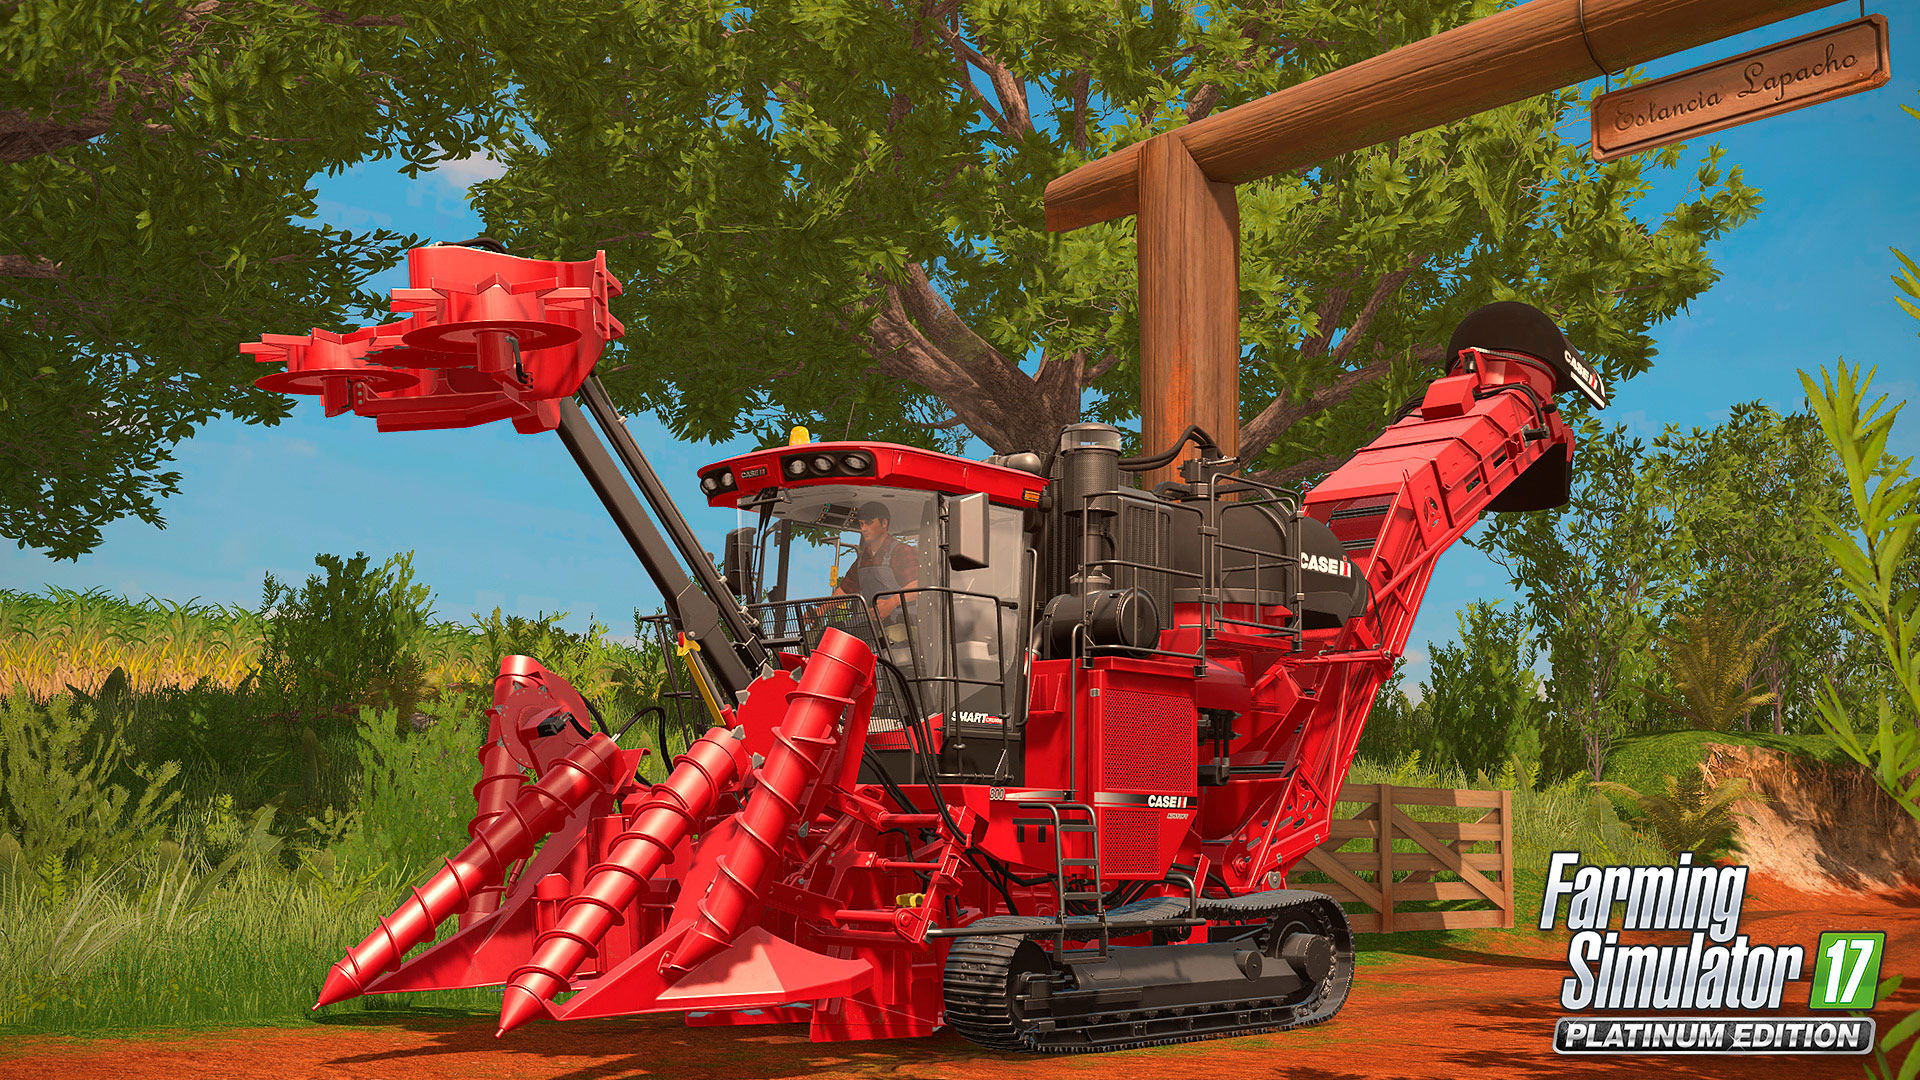 malm på vegne af Snart Farming Simulator 17 Platinum Edition For PC, Mac, PS4 and Xbox One! LS2017  mods - Farming Simulator 2022 mod, LS 2022 mod / FS 22 mod